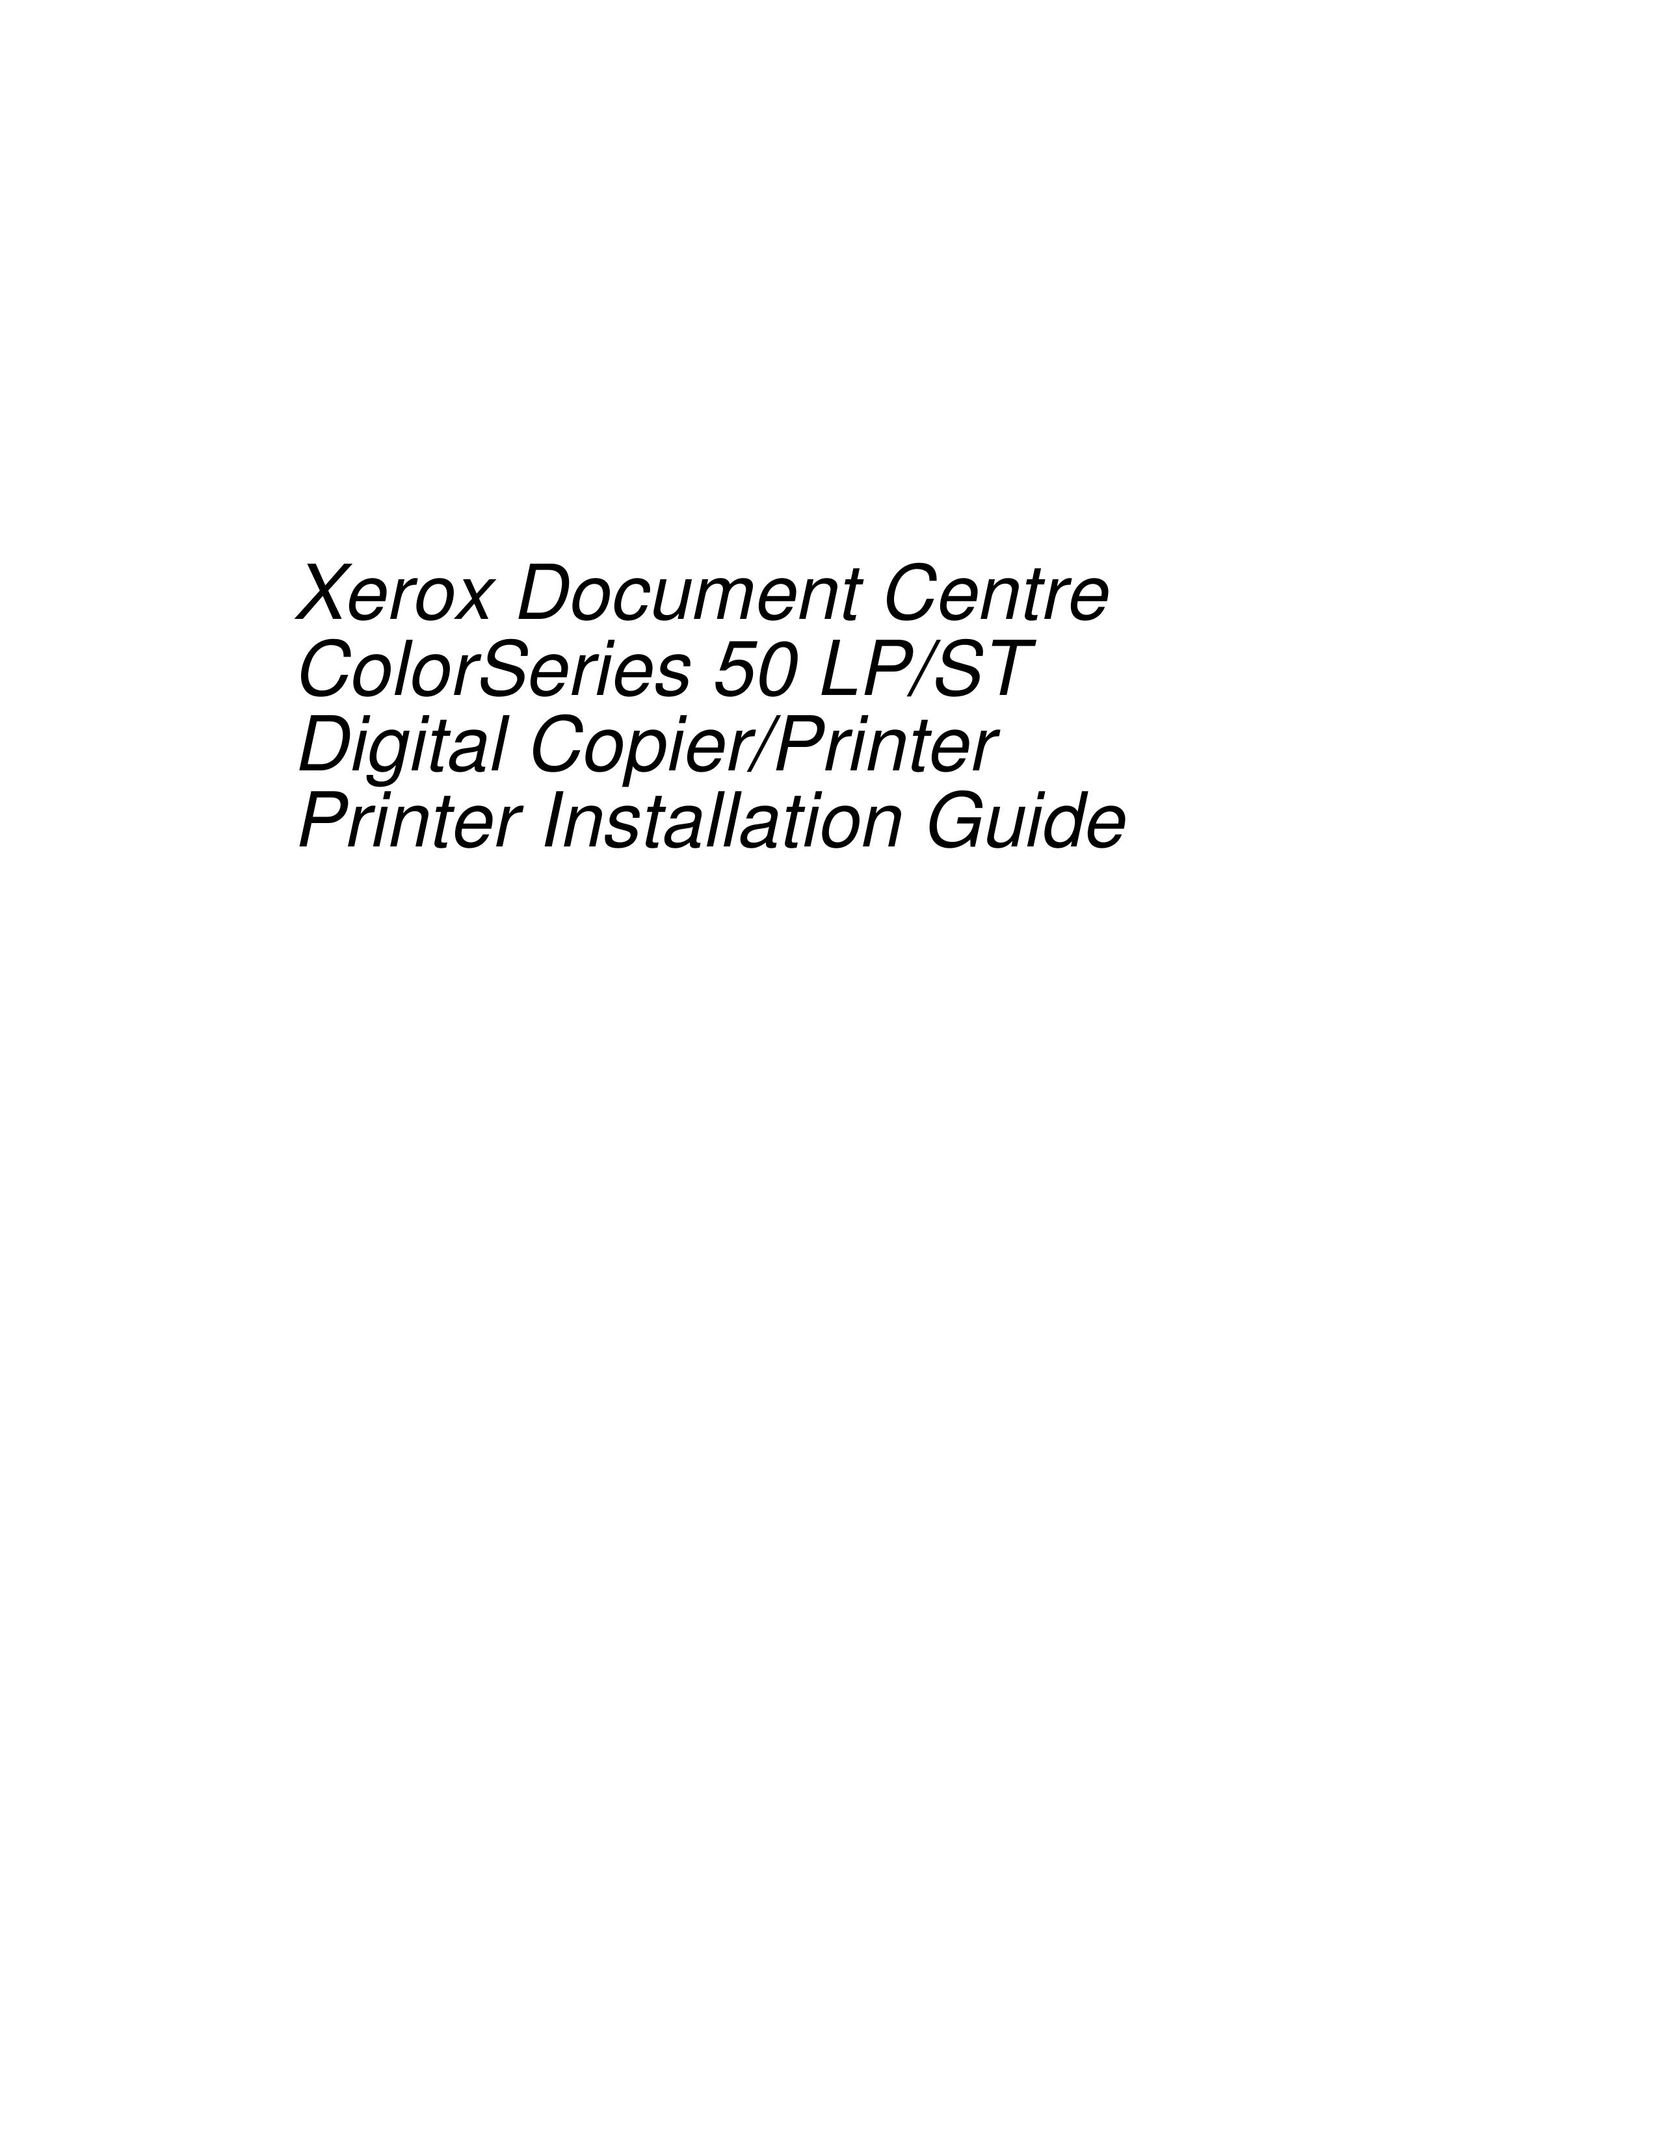 Xerox 50 LP/ST Copier User Manual